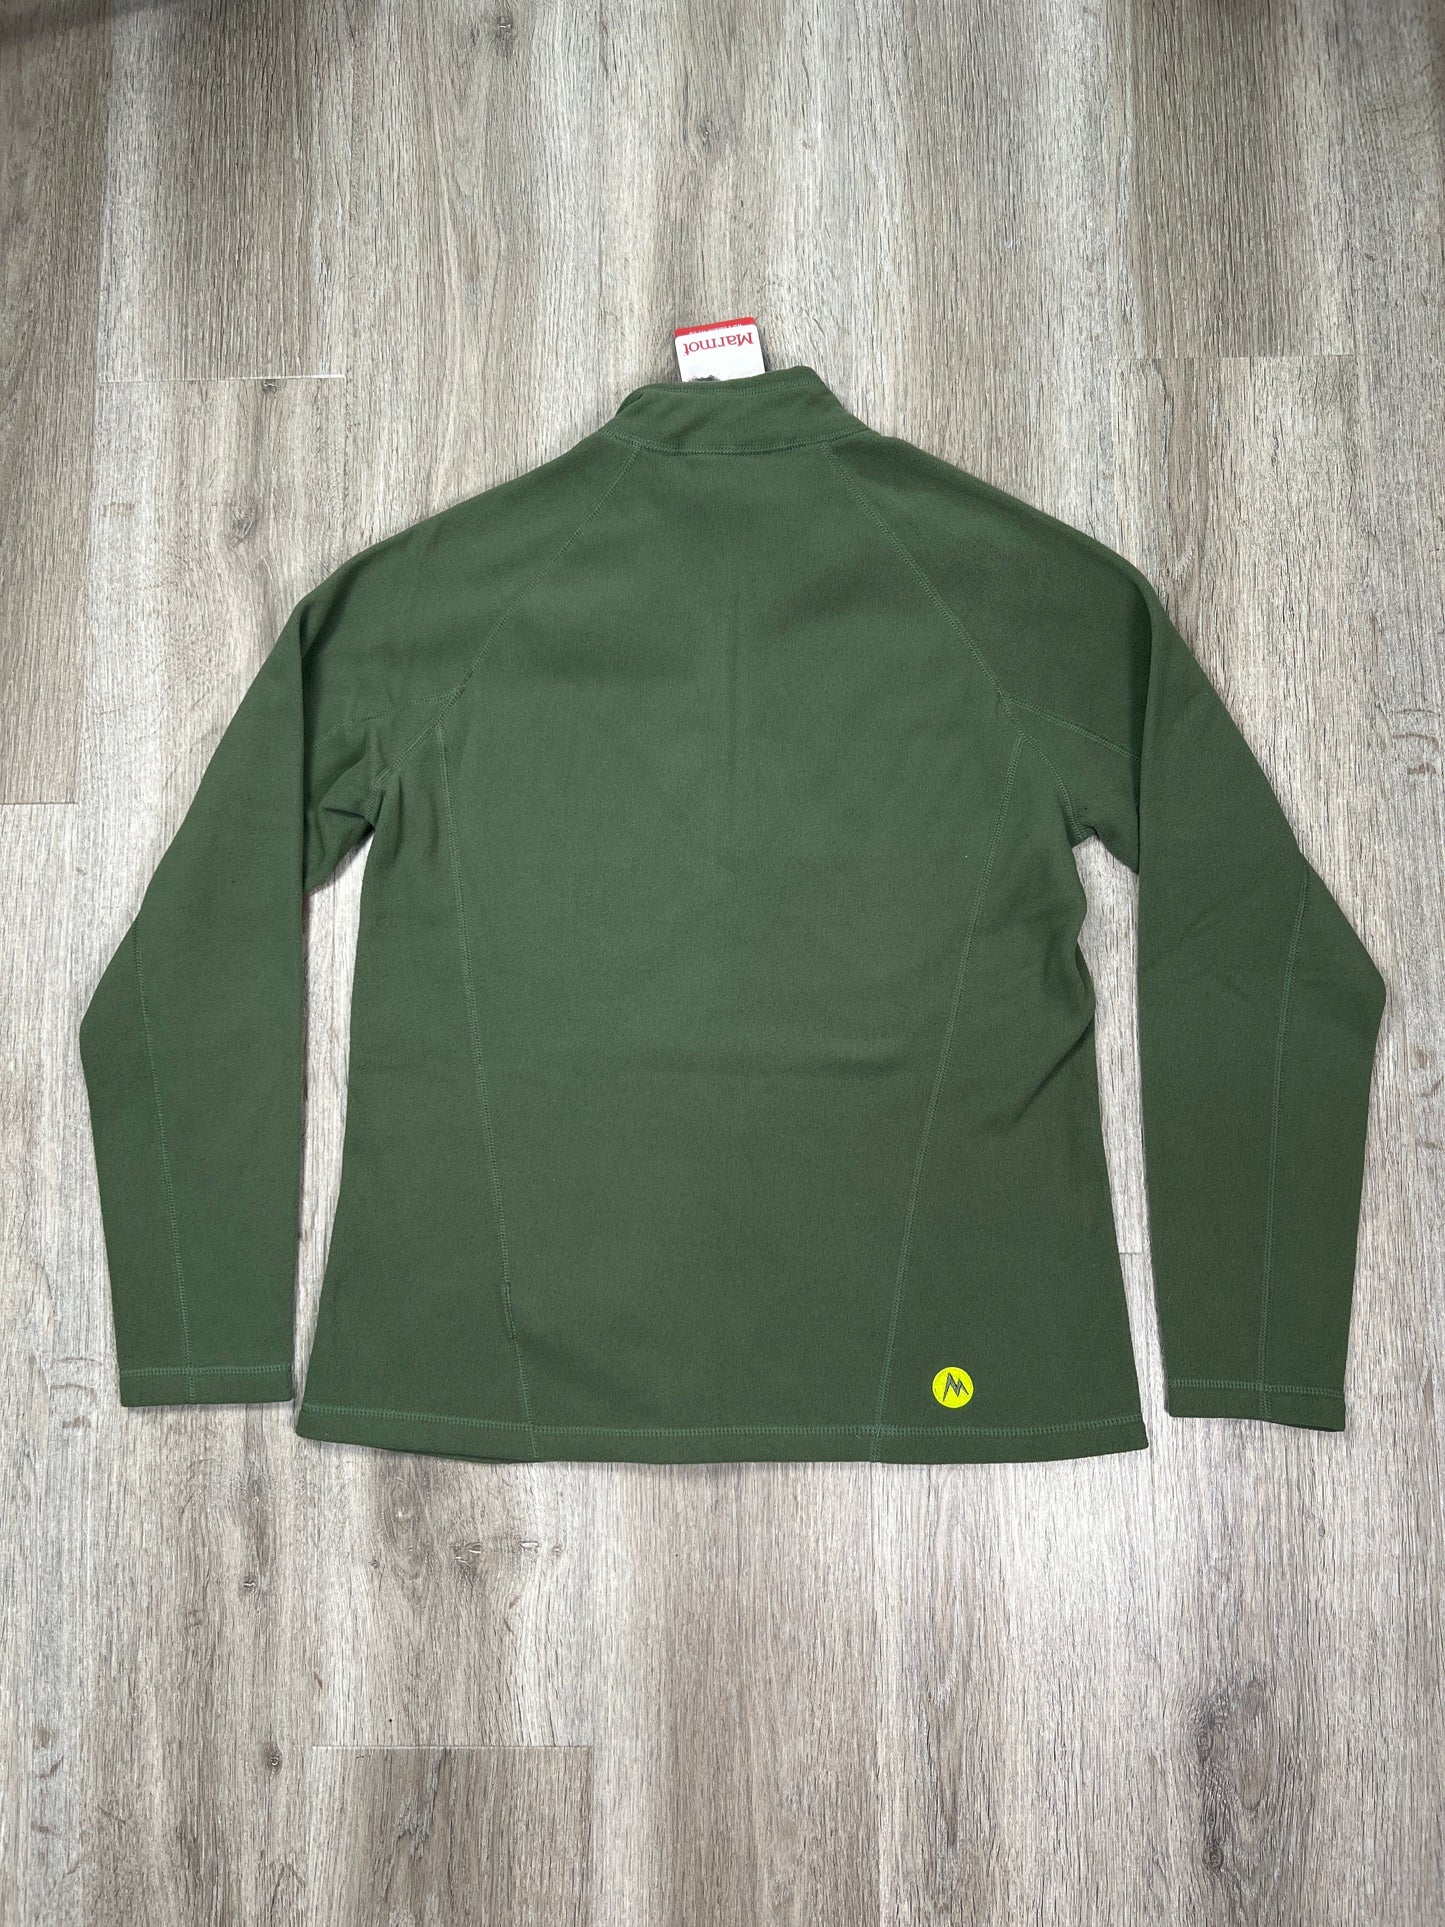 Green Sweatshirt Collar Marmot, Size L